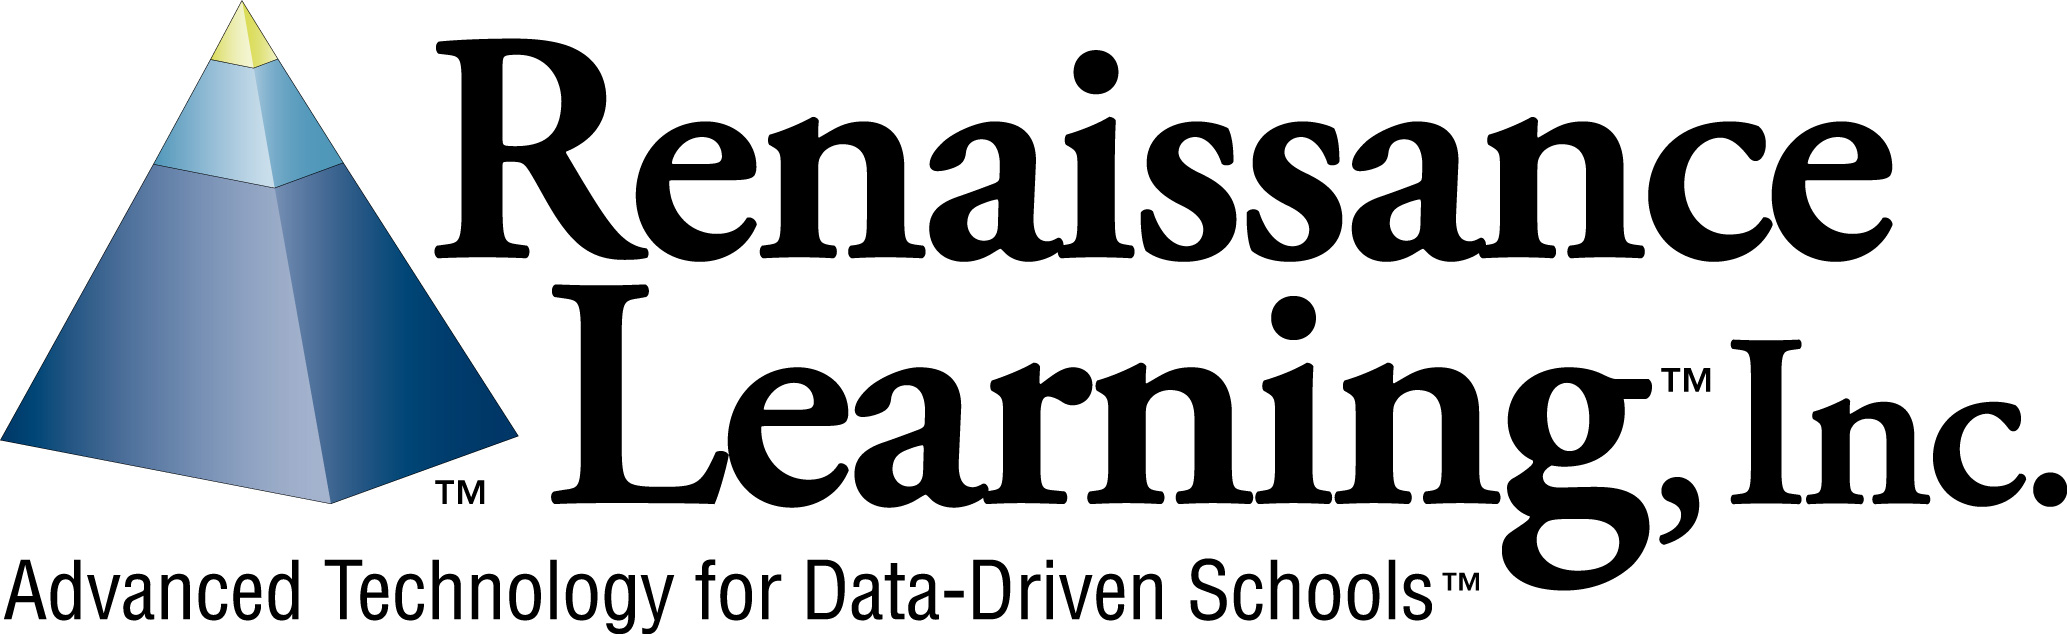 Renaissance Learning, Inc. Logo